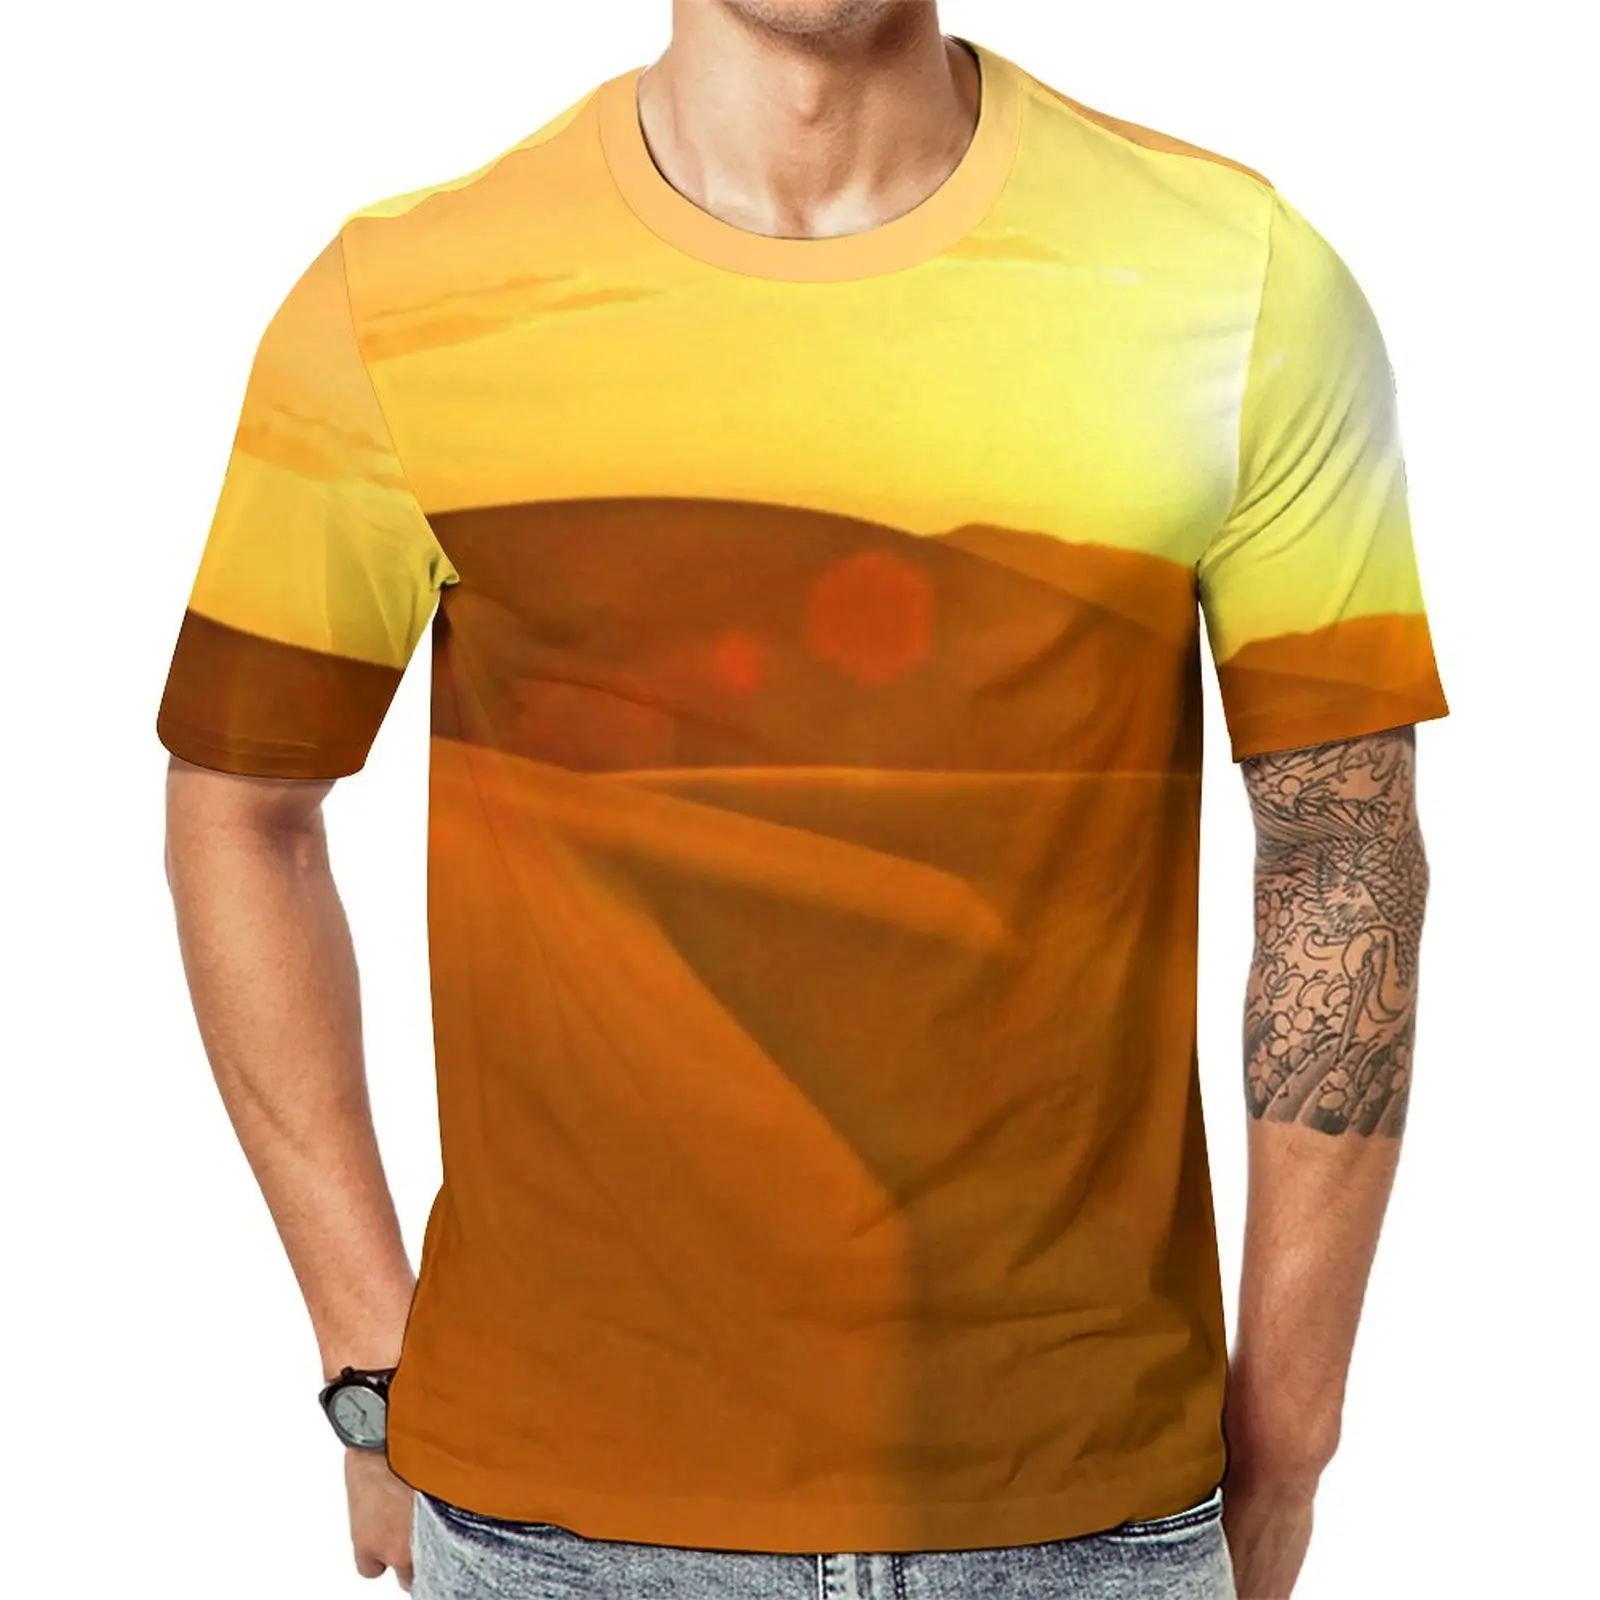 

Gold Desert T-Shirt Sand Dune Sunset Mens Fashion T-Shirts Premium Printed Tees Short-Sleeved Aesthetic Oversize Tops Gift Idea